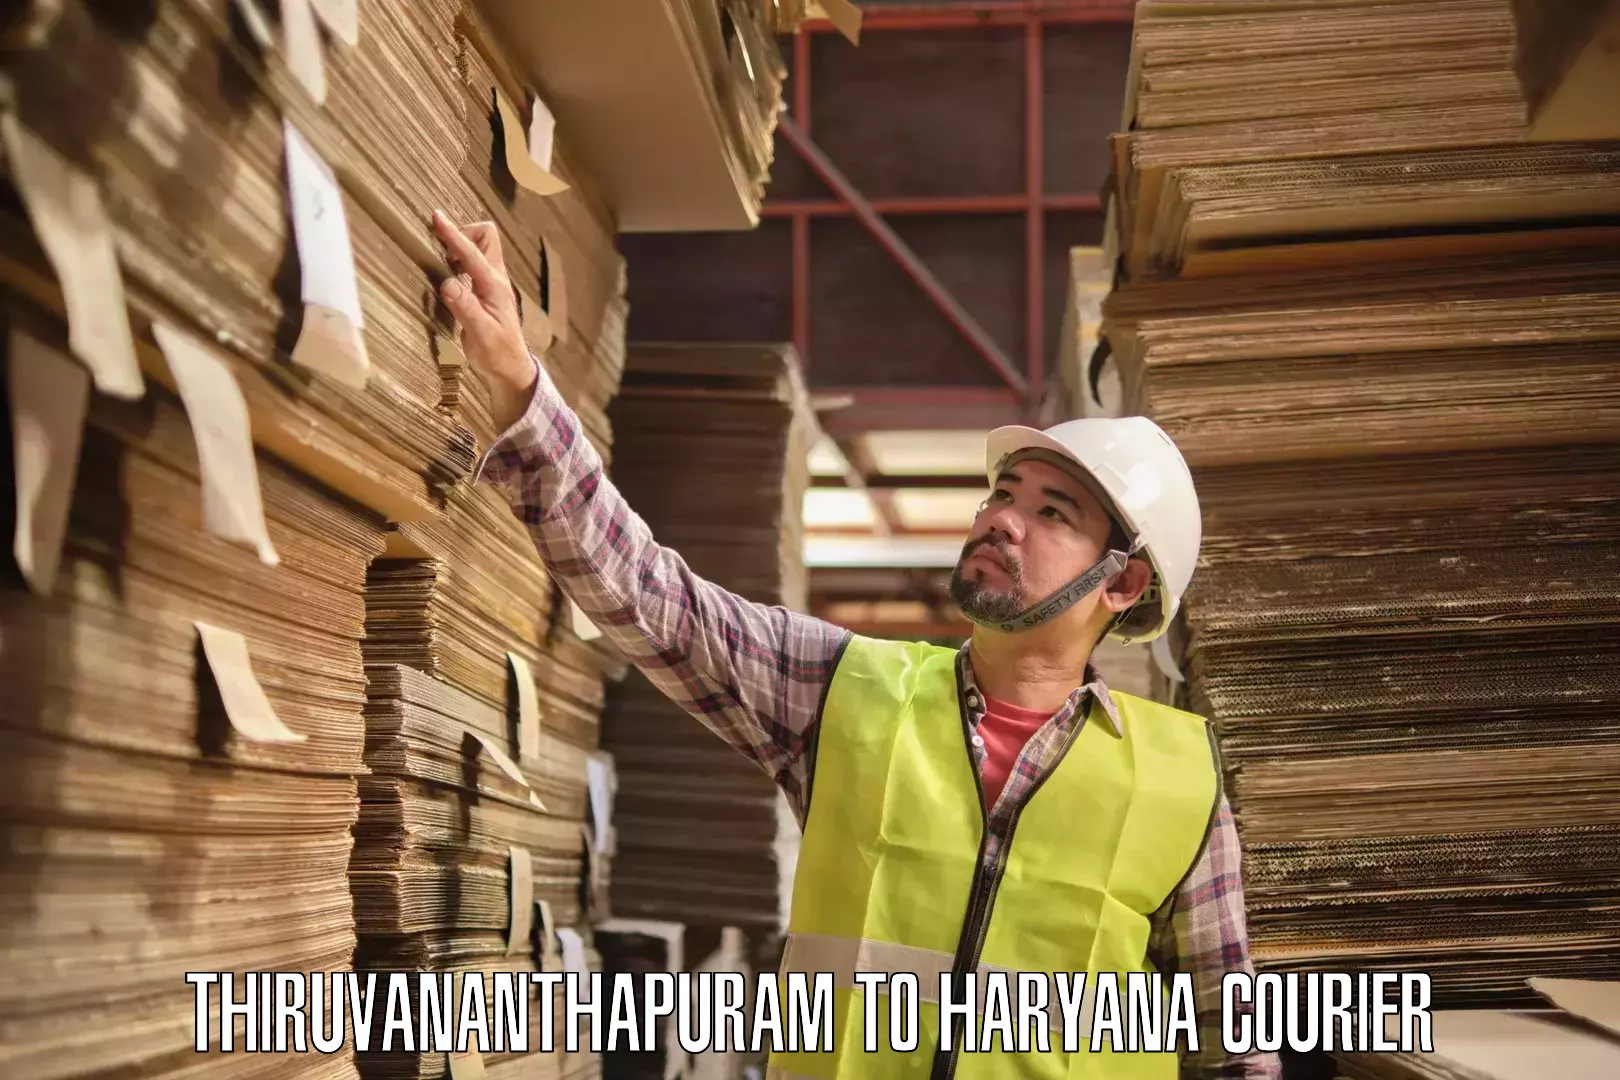 Courier service comparison Thiruvananthapuram to Haryana